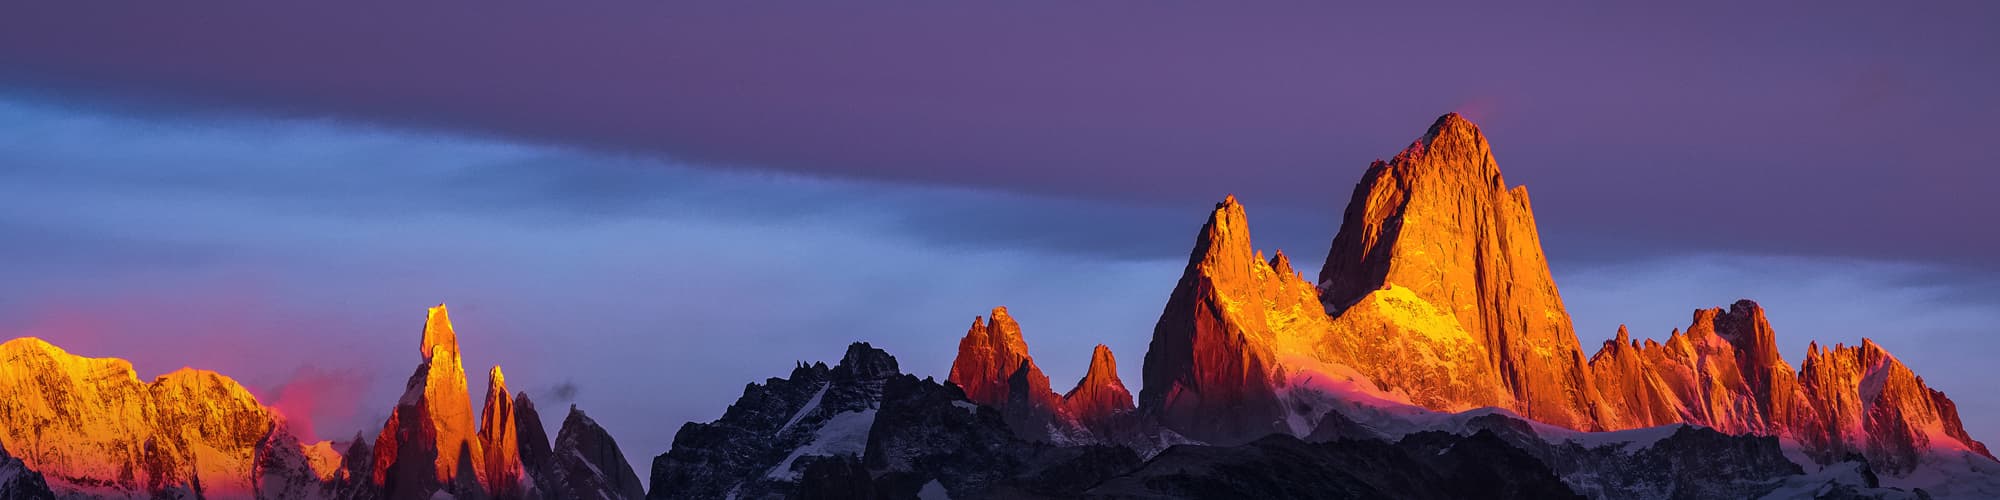 Voyage sur mesure Patagonie argentine © George Theodore/Danita Delimont / Adobe Stock